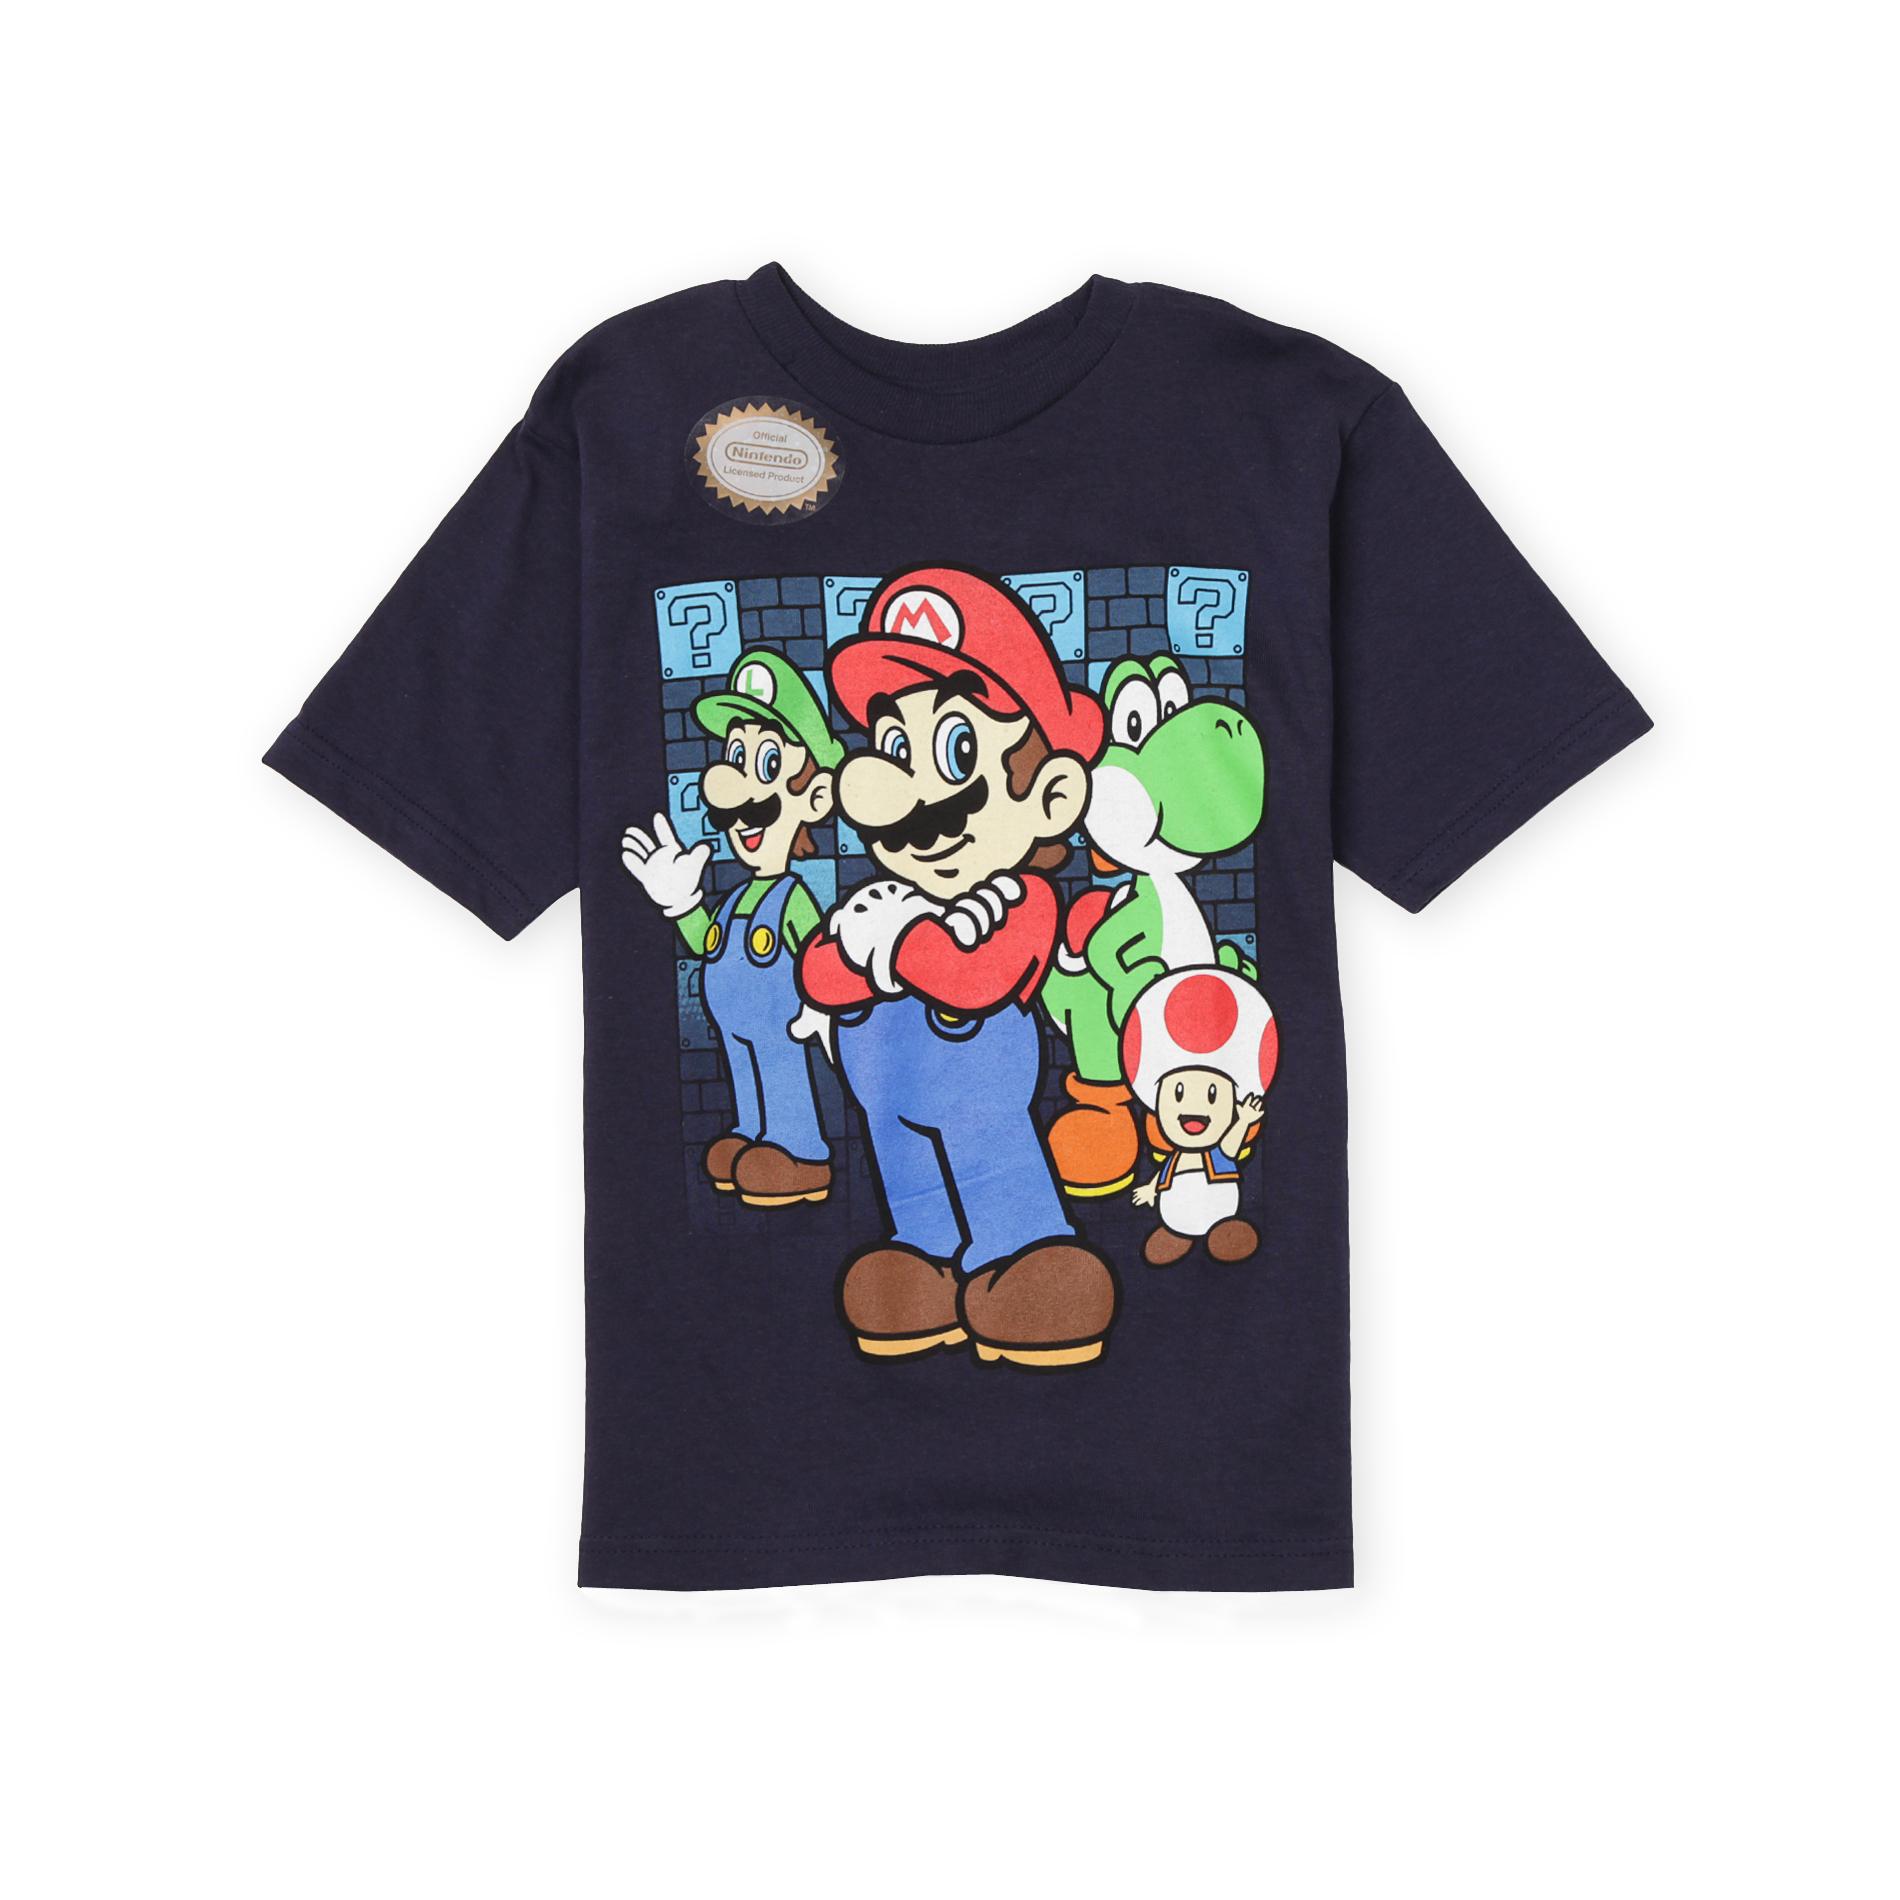 Nintendo Boy's Graphic T-Shirt - Super Mario & Friends